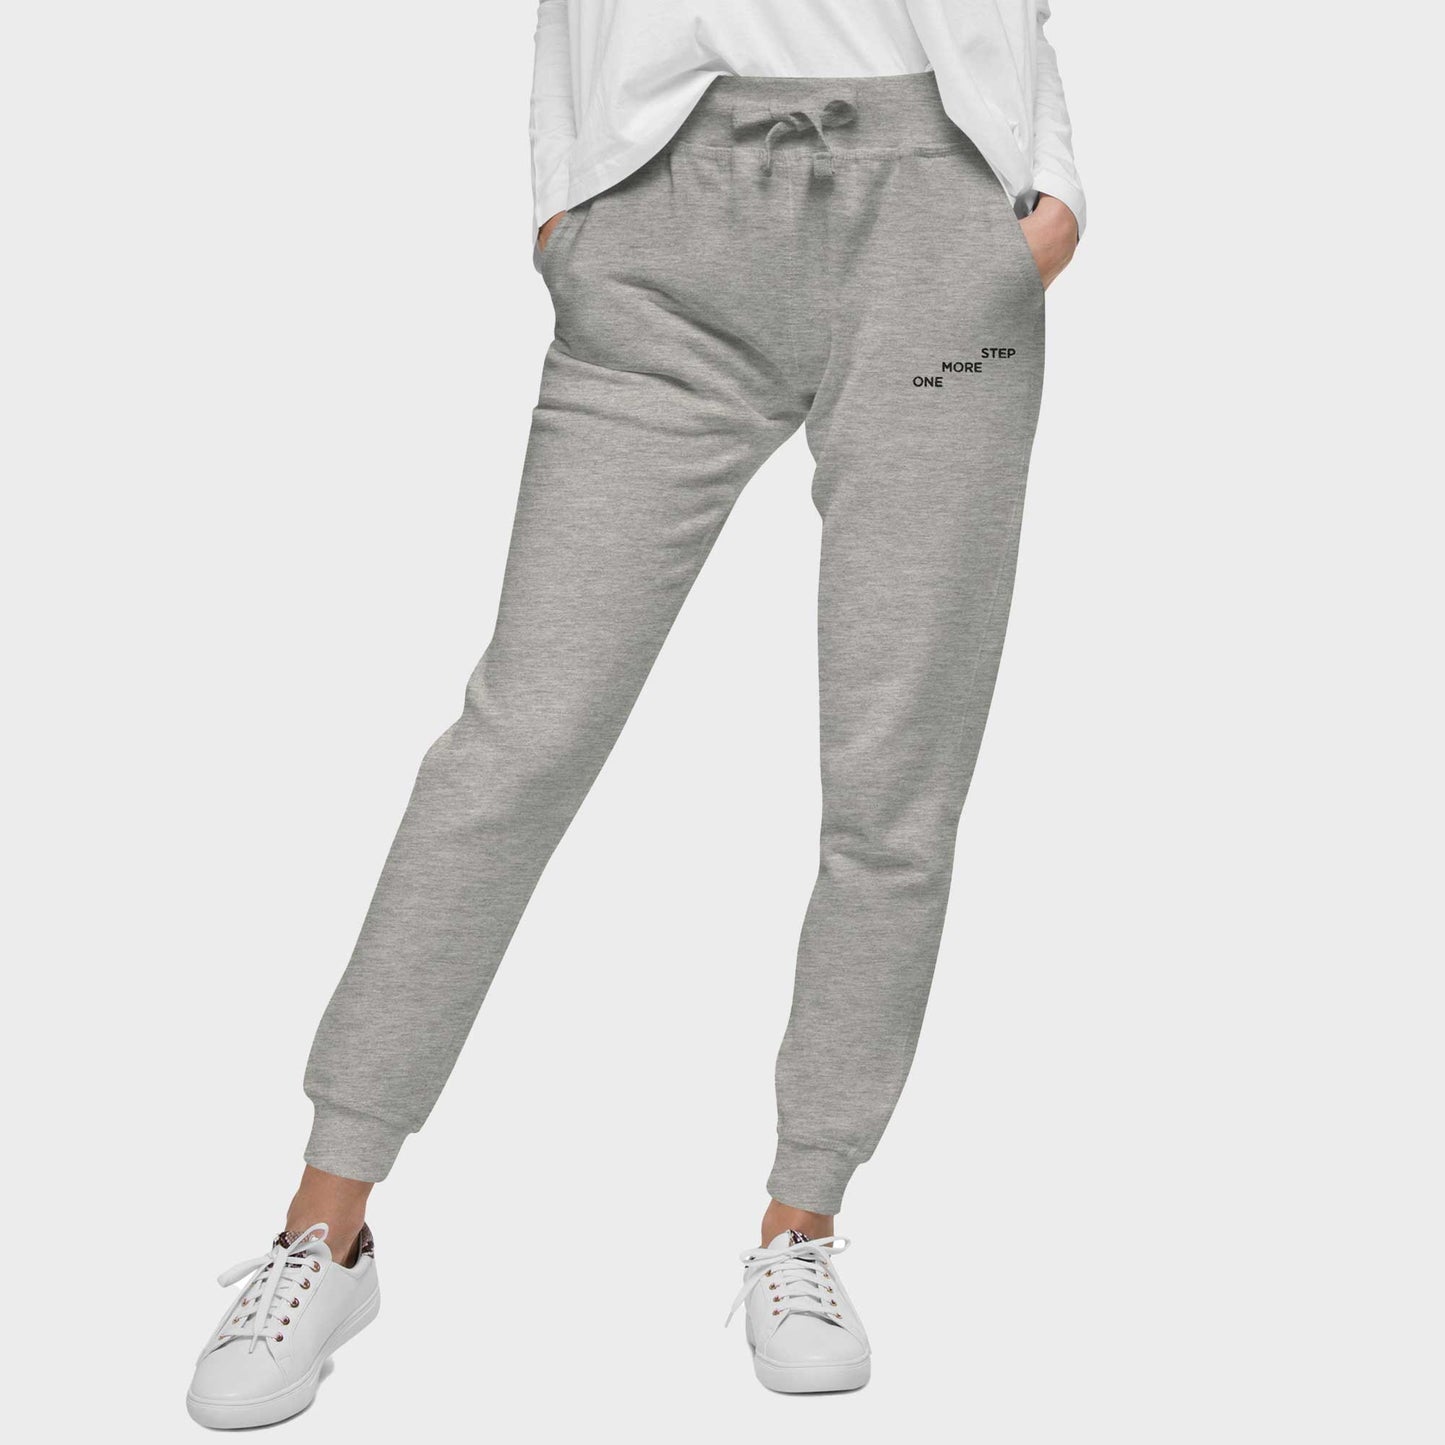 One More Step Women's Inspirational Oversized Fleece Sweatpants